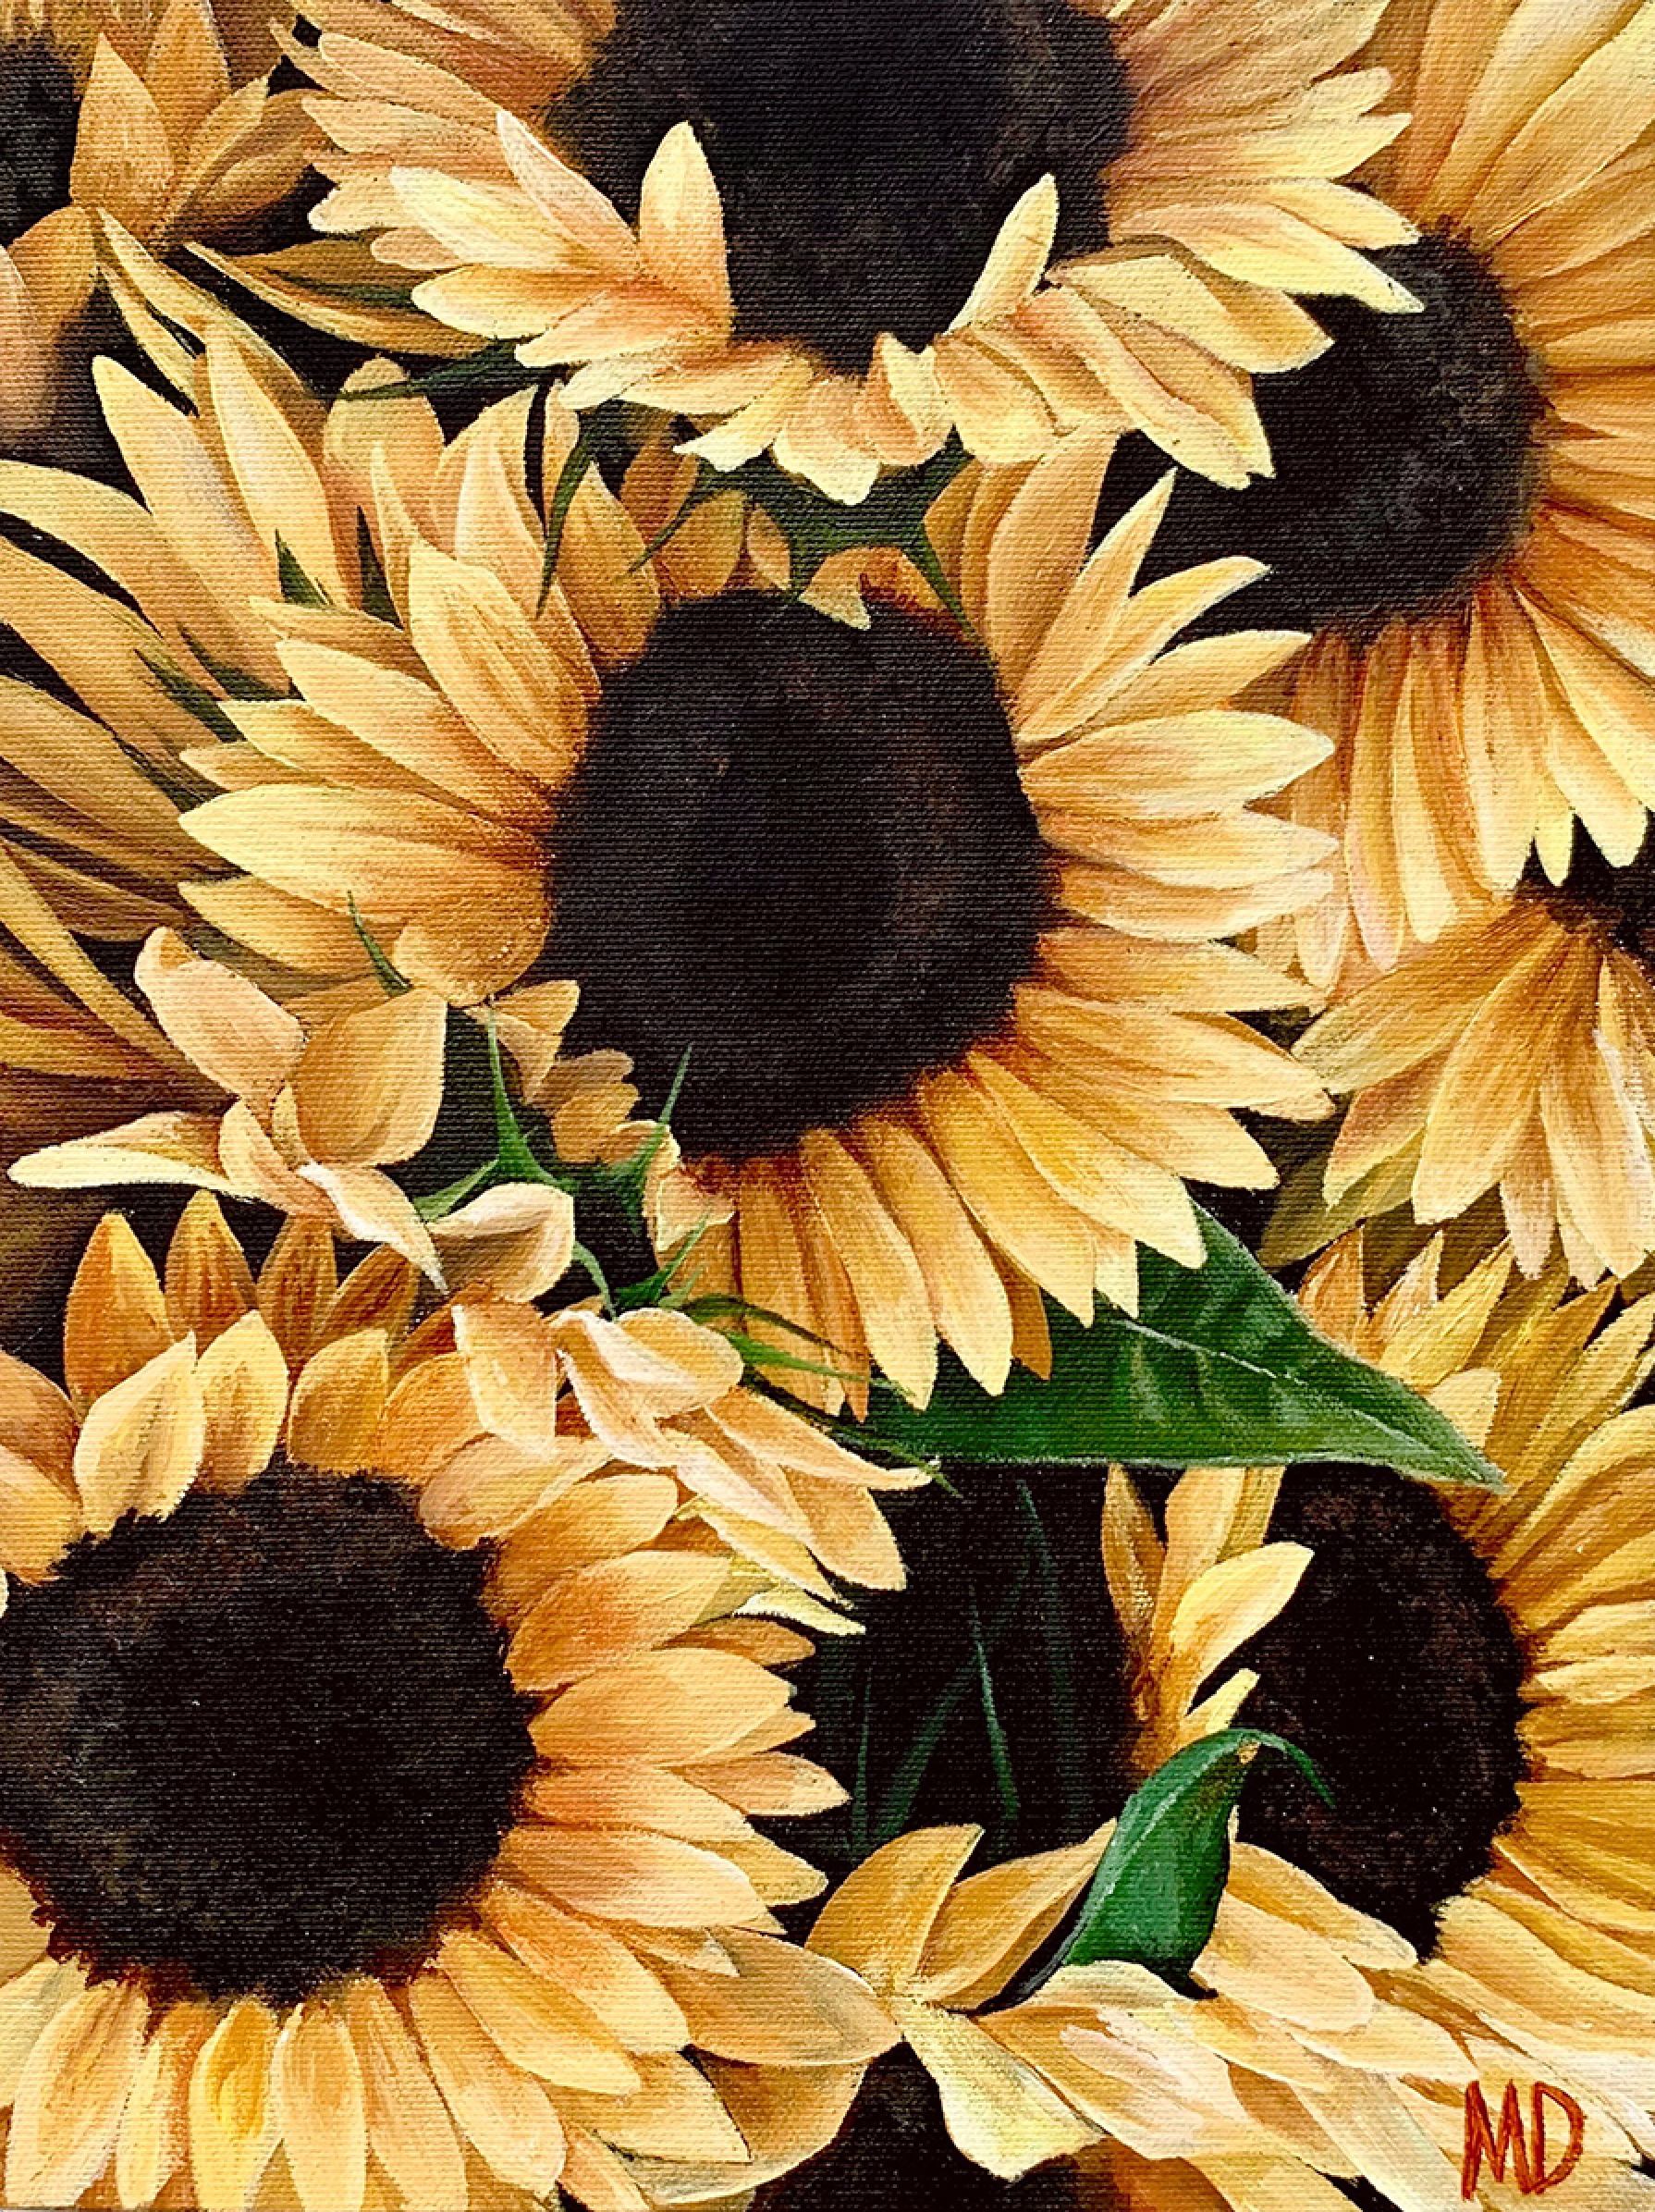 9"x12" Canvas - Sunflowers